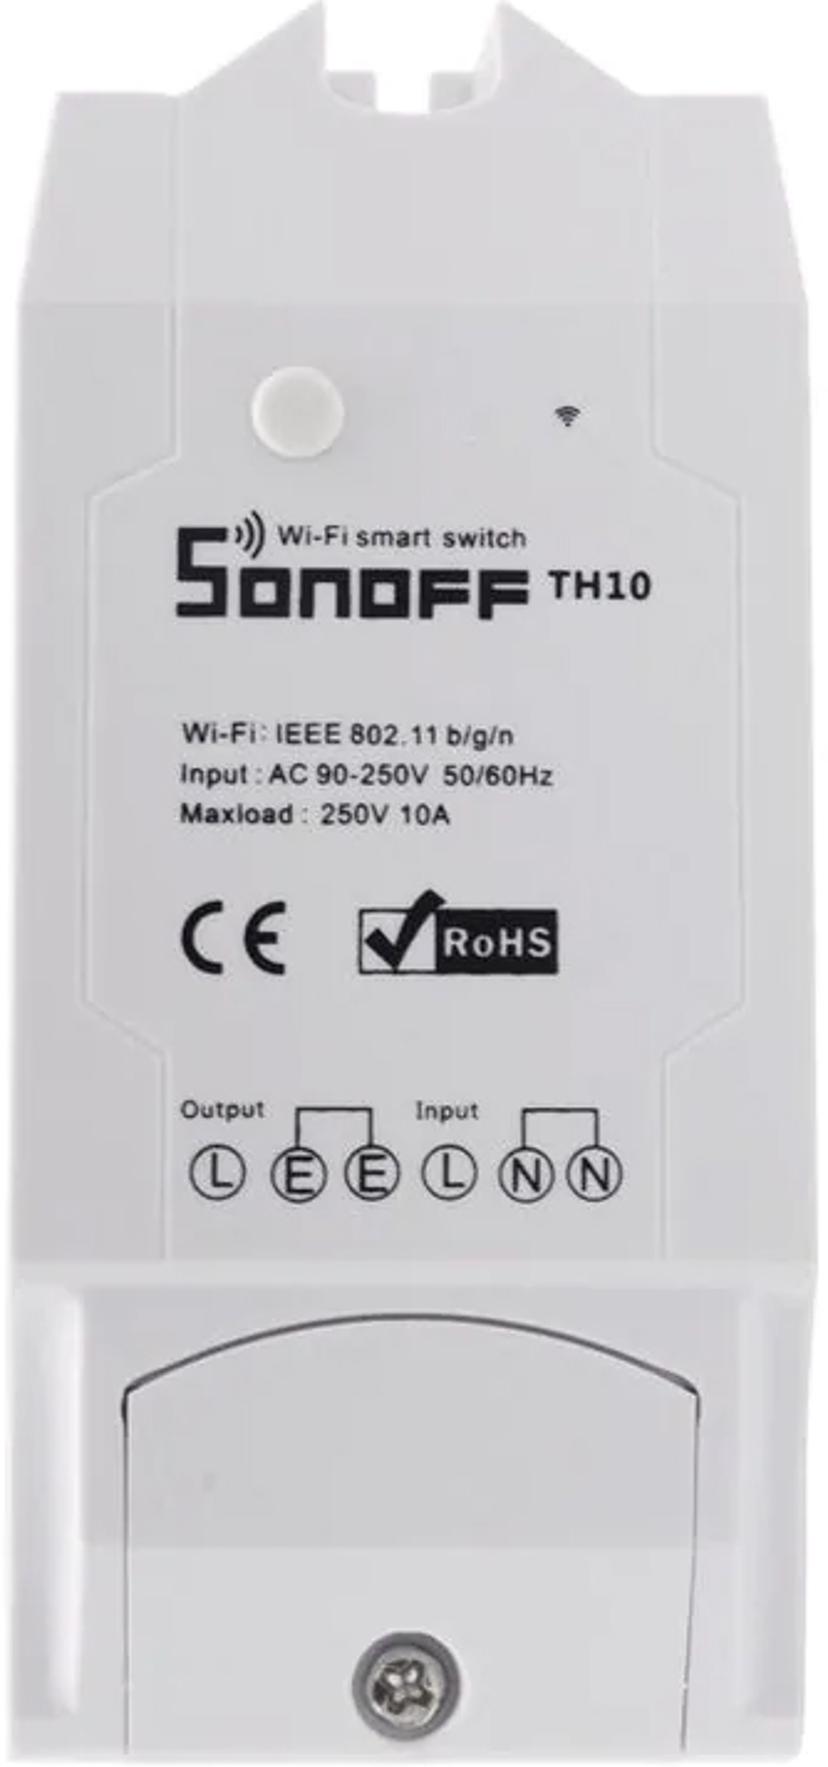 Sonoff WiFi Smart Switch TH10